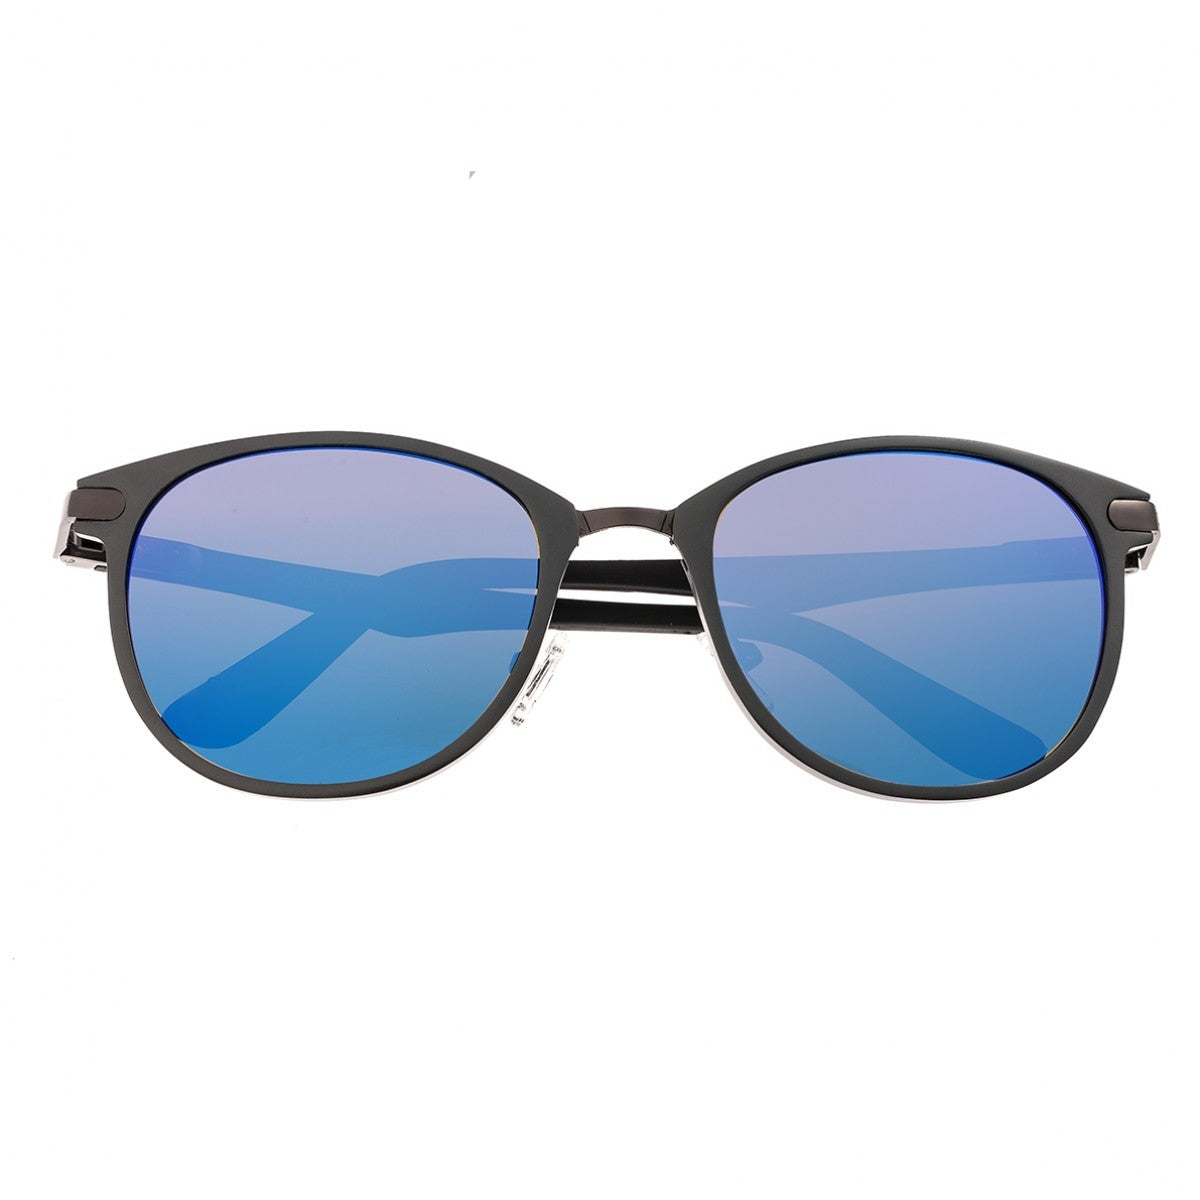 Breed Cetus Aluminium and Carbon Fiber Polarized Sunglasses - Gunmetal/Blue - BSG027GM